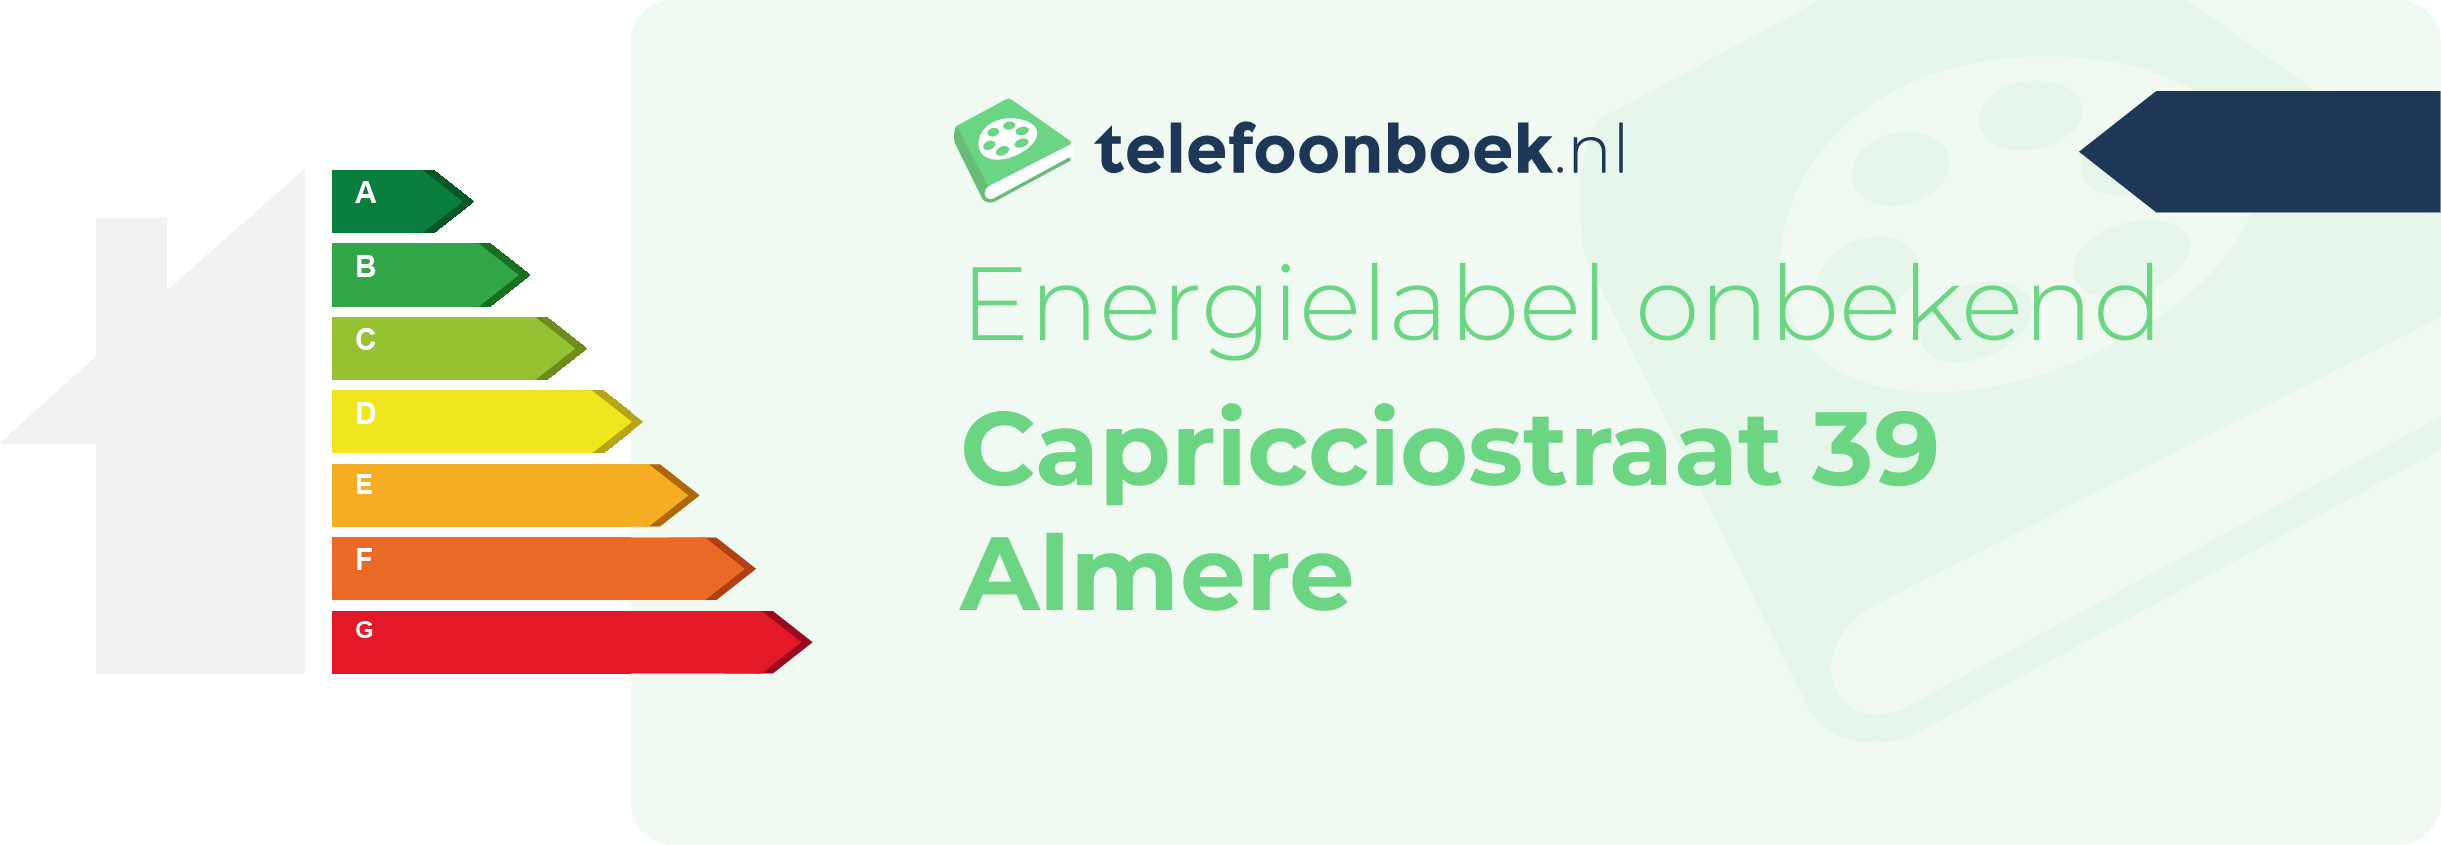 Energielabel Capricciostraat 39 Almere